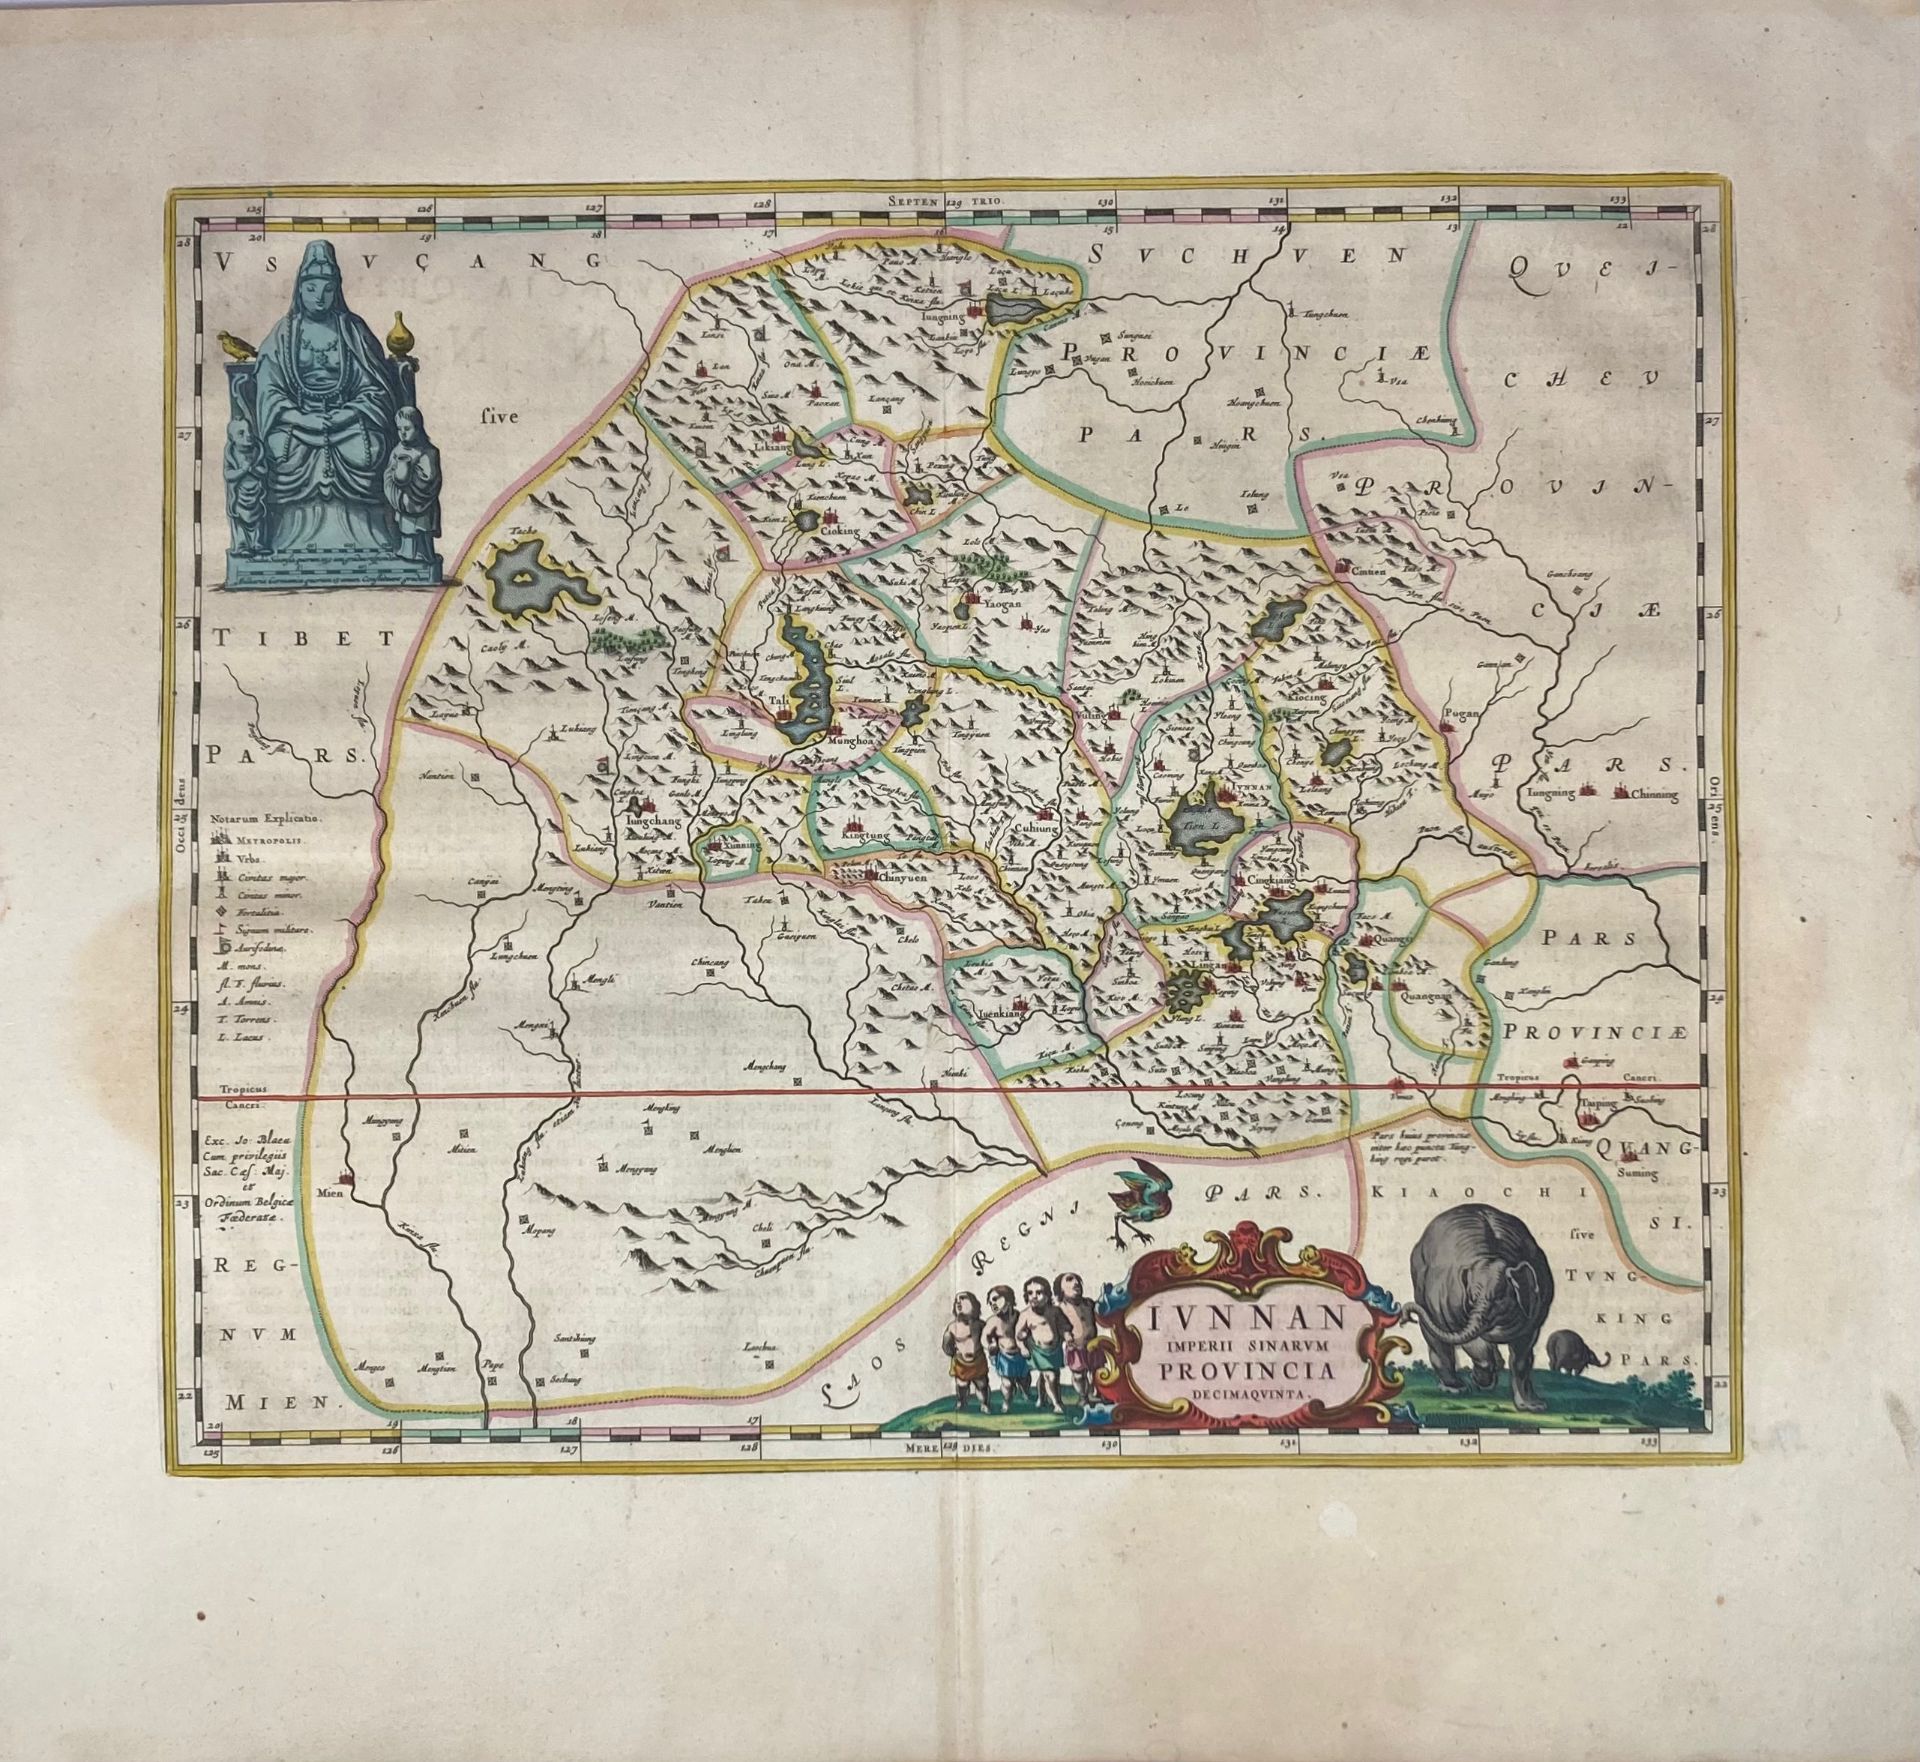 ASIA -- CHINA -- "IUNNAN IMPERII Sinarum Provincia Decimaquinta". (Amst., J. Blaeu, 1658-59). Engr